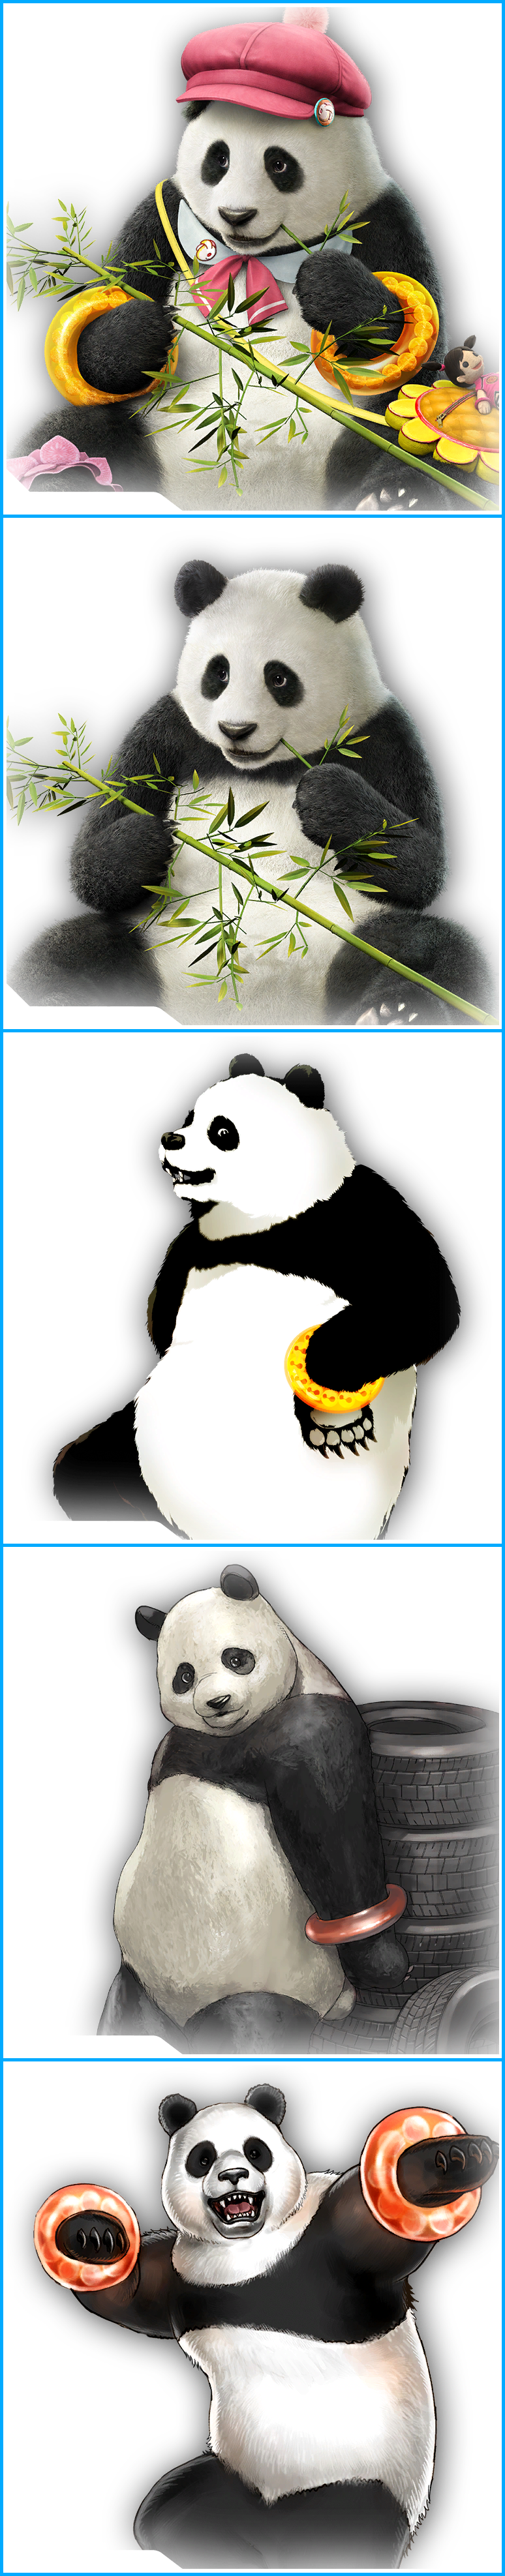 Tekken 7 - Panda